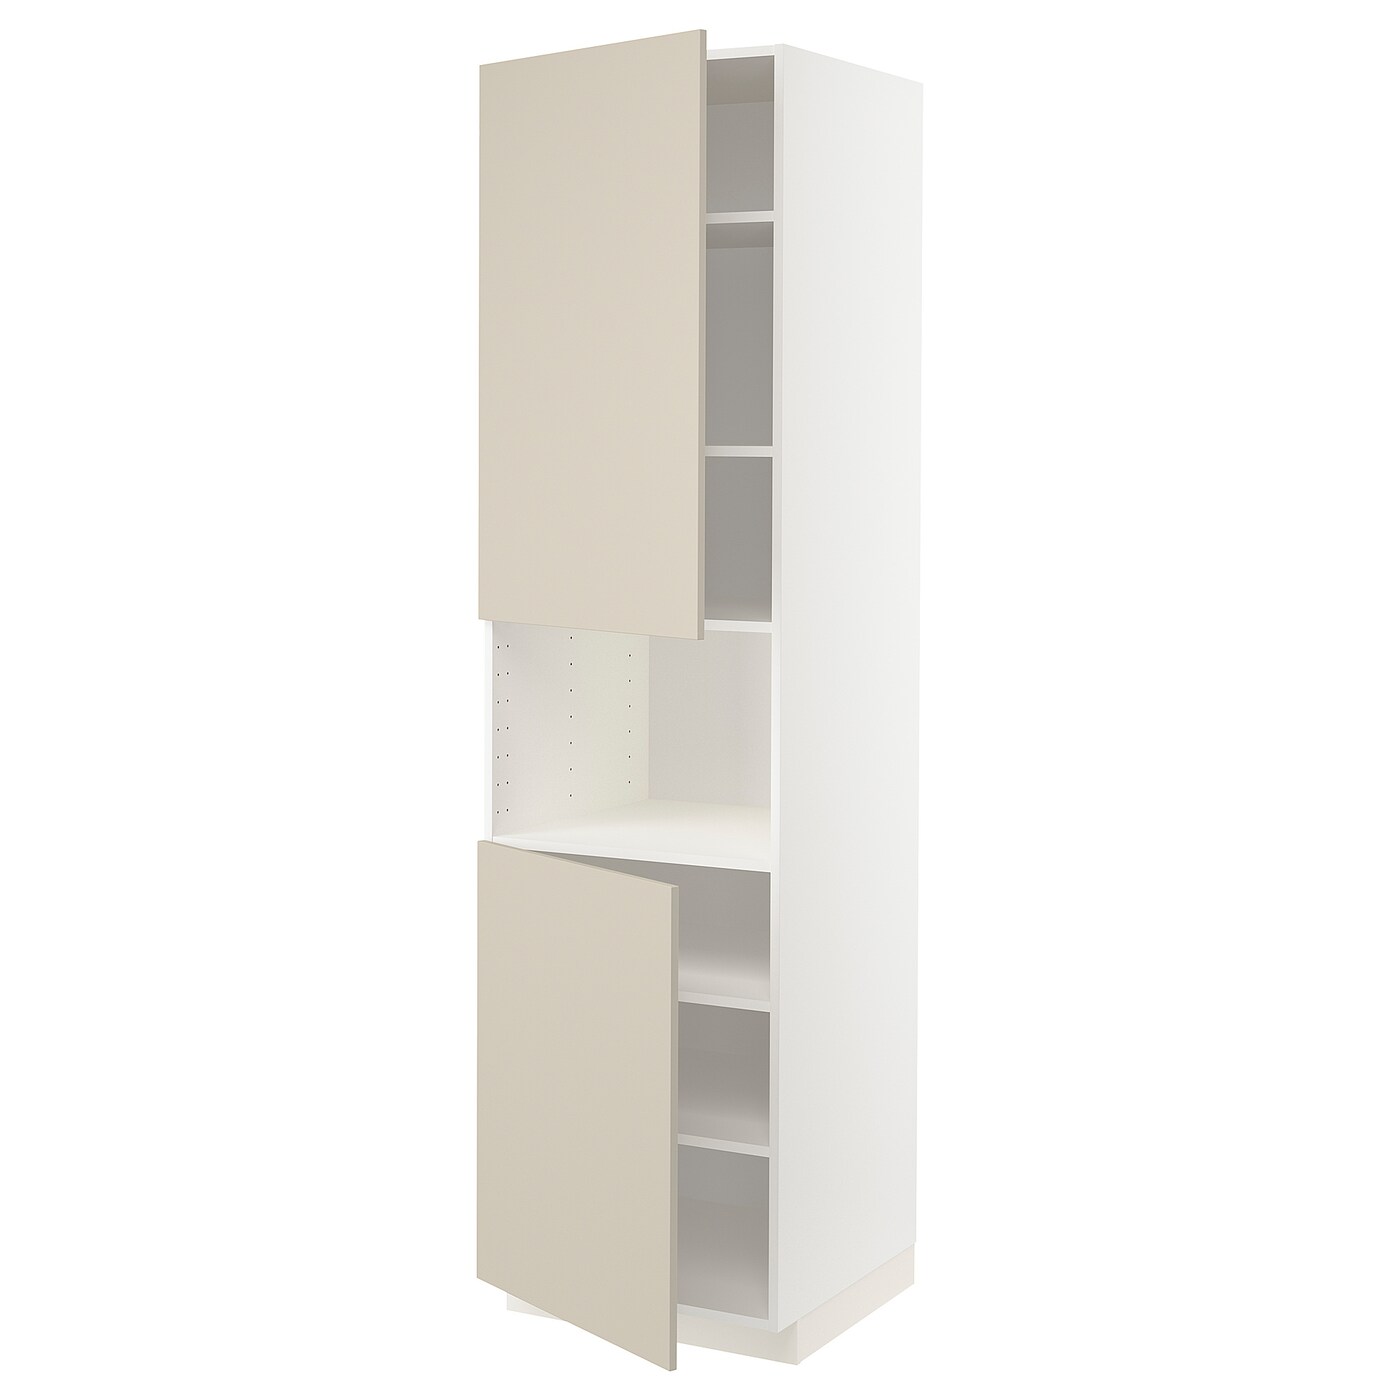 Высокий кухонный шкаф с полками - IKEA METOD/МЕТОД ИКЕА, 220х60х60 см, белый/бежевый